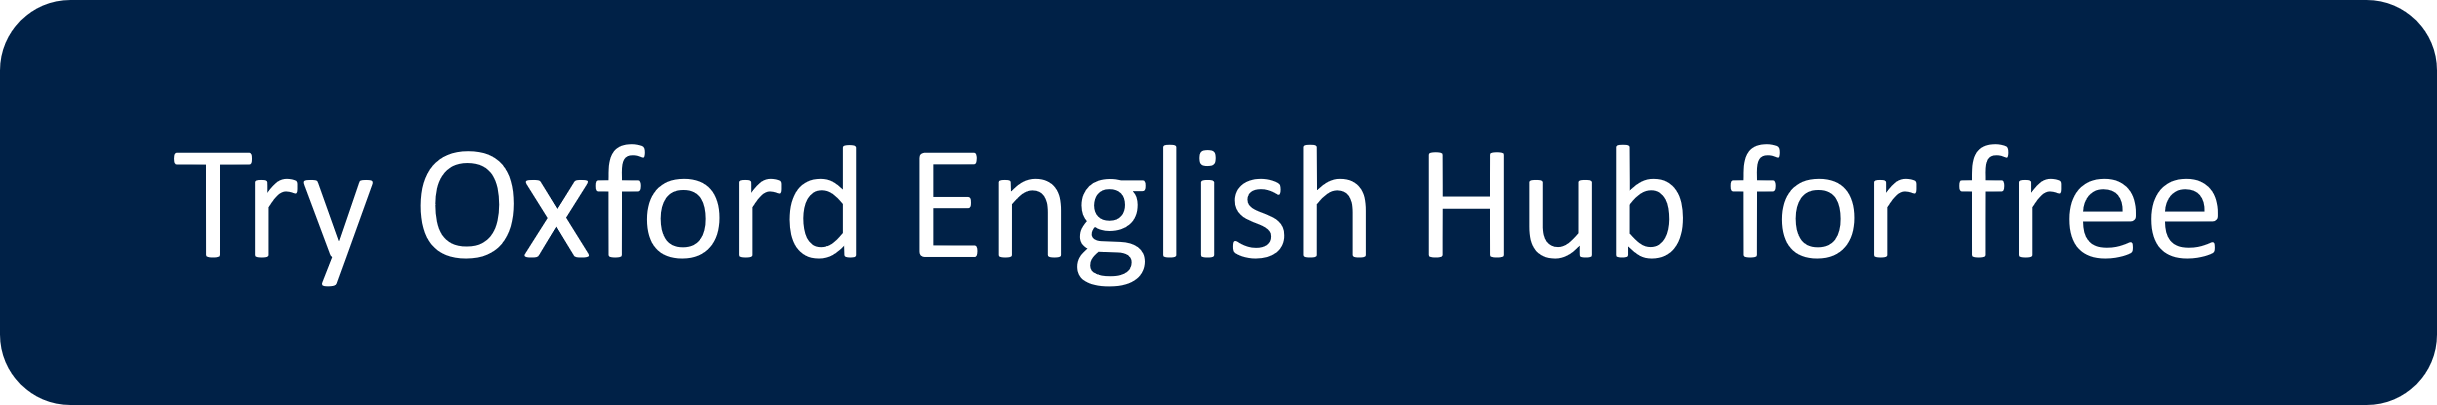 Try Oxford English Hub for free